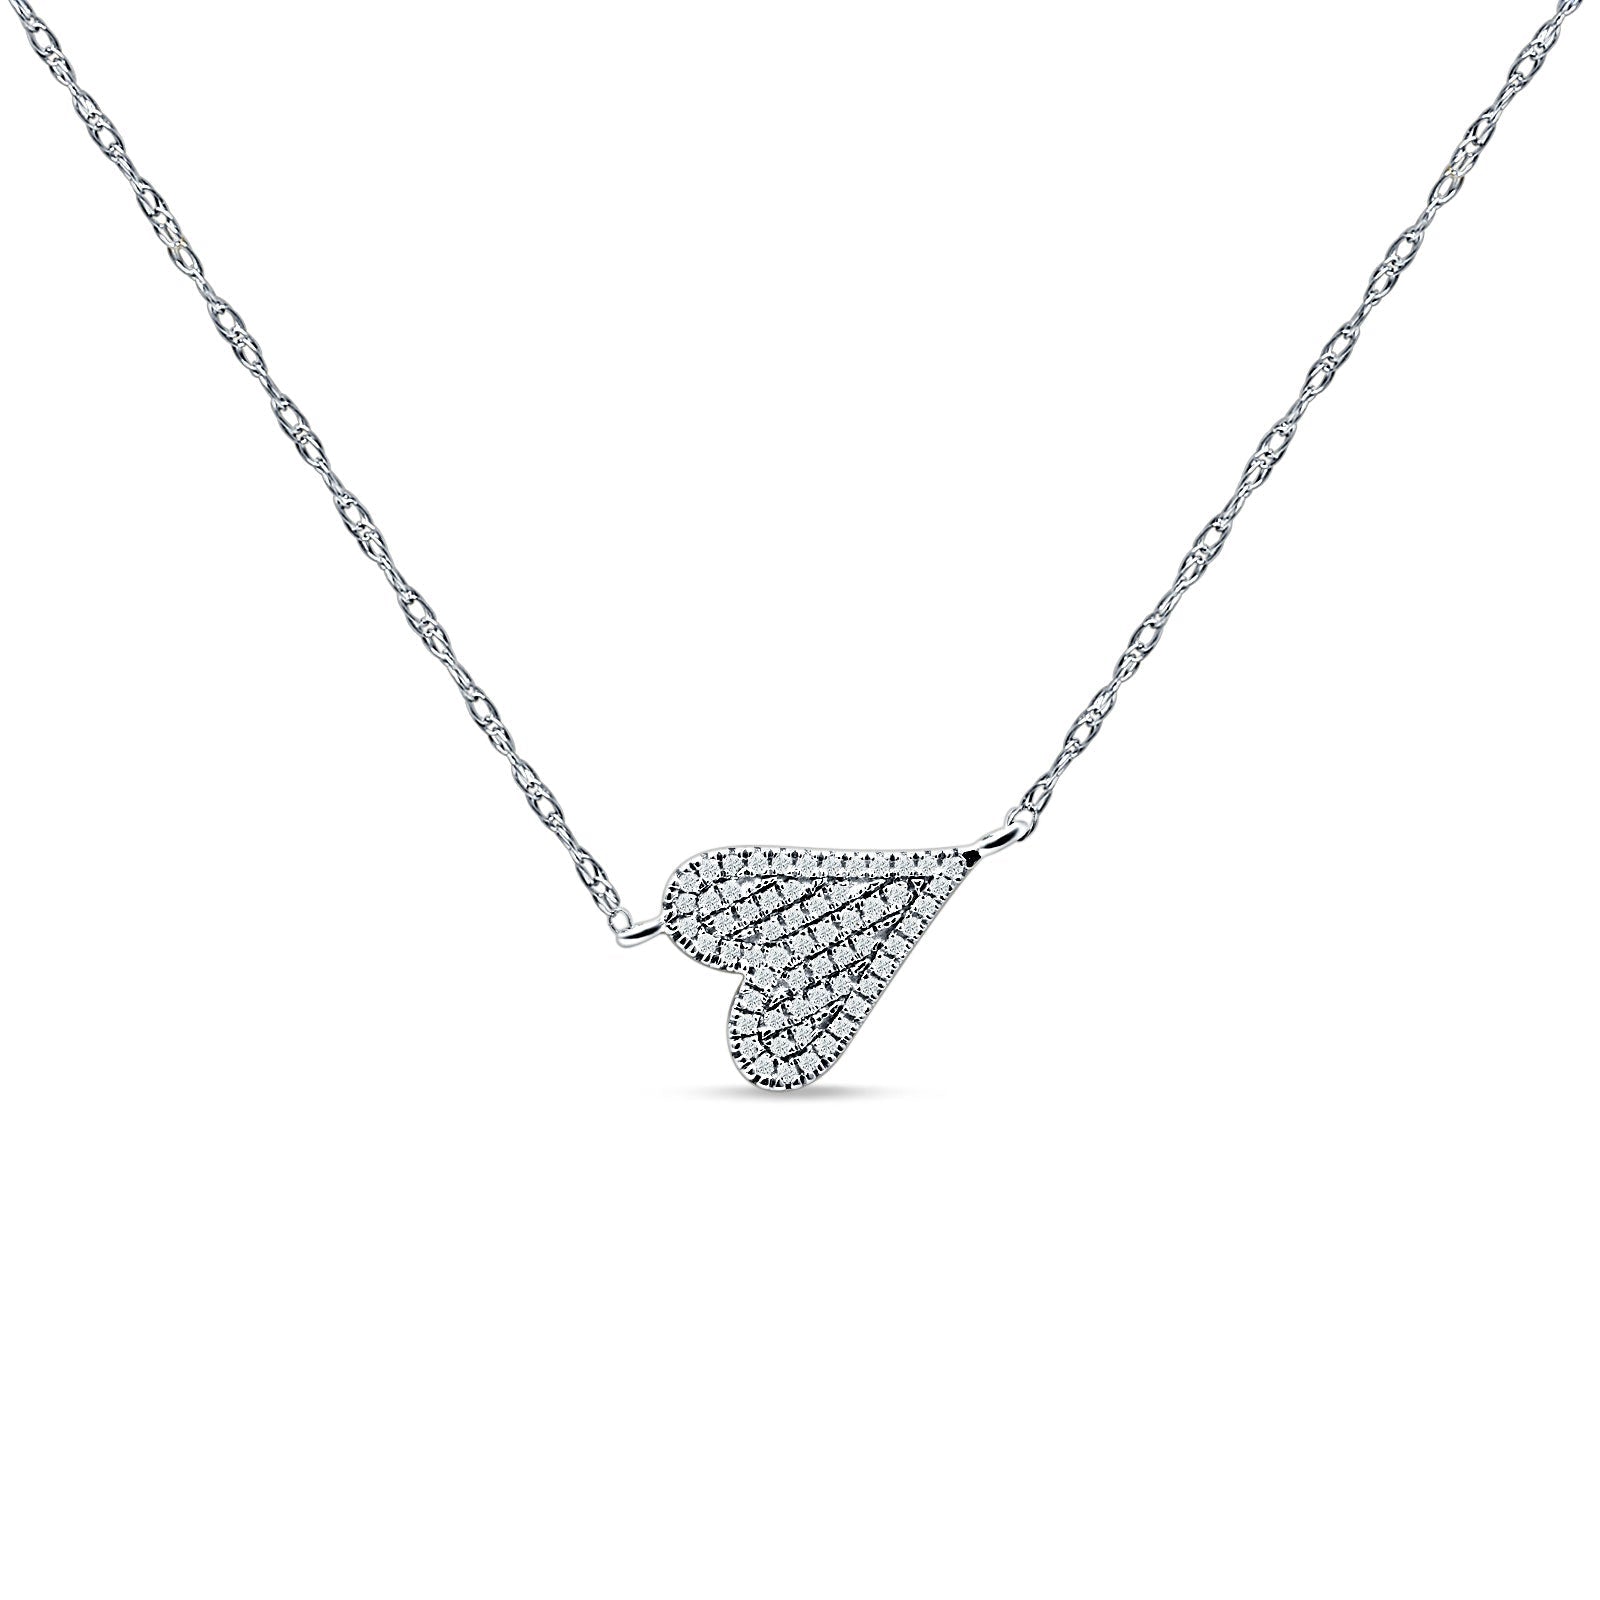 Diamond Sideways Heart Necklace 14K Gold 0.09ct